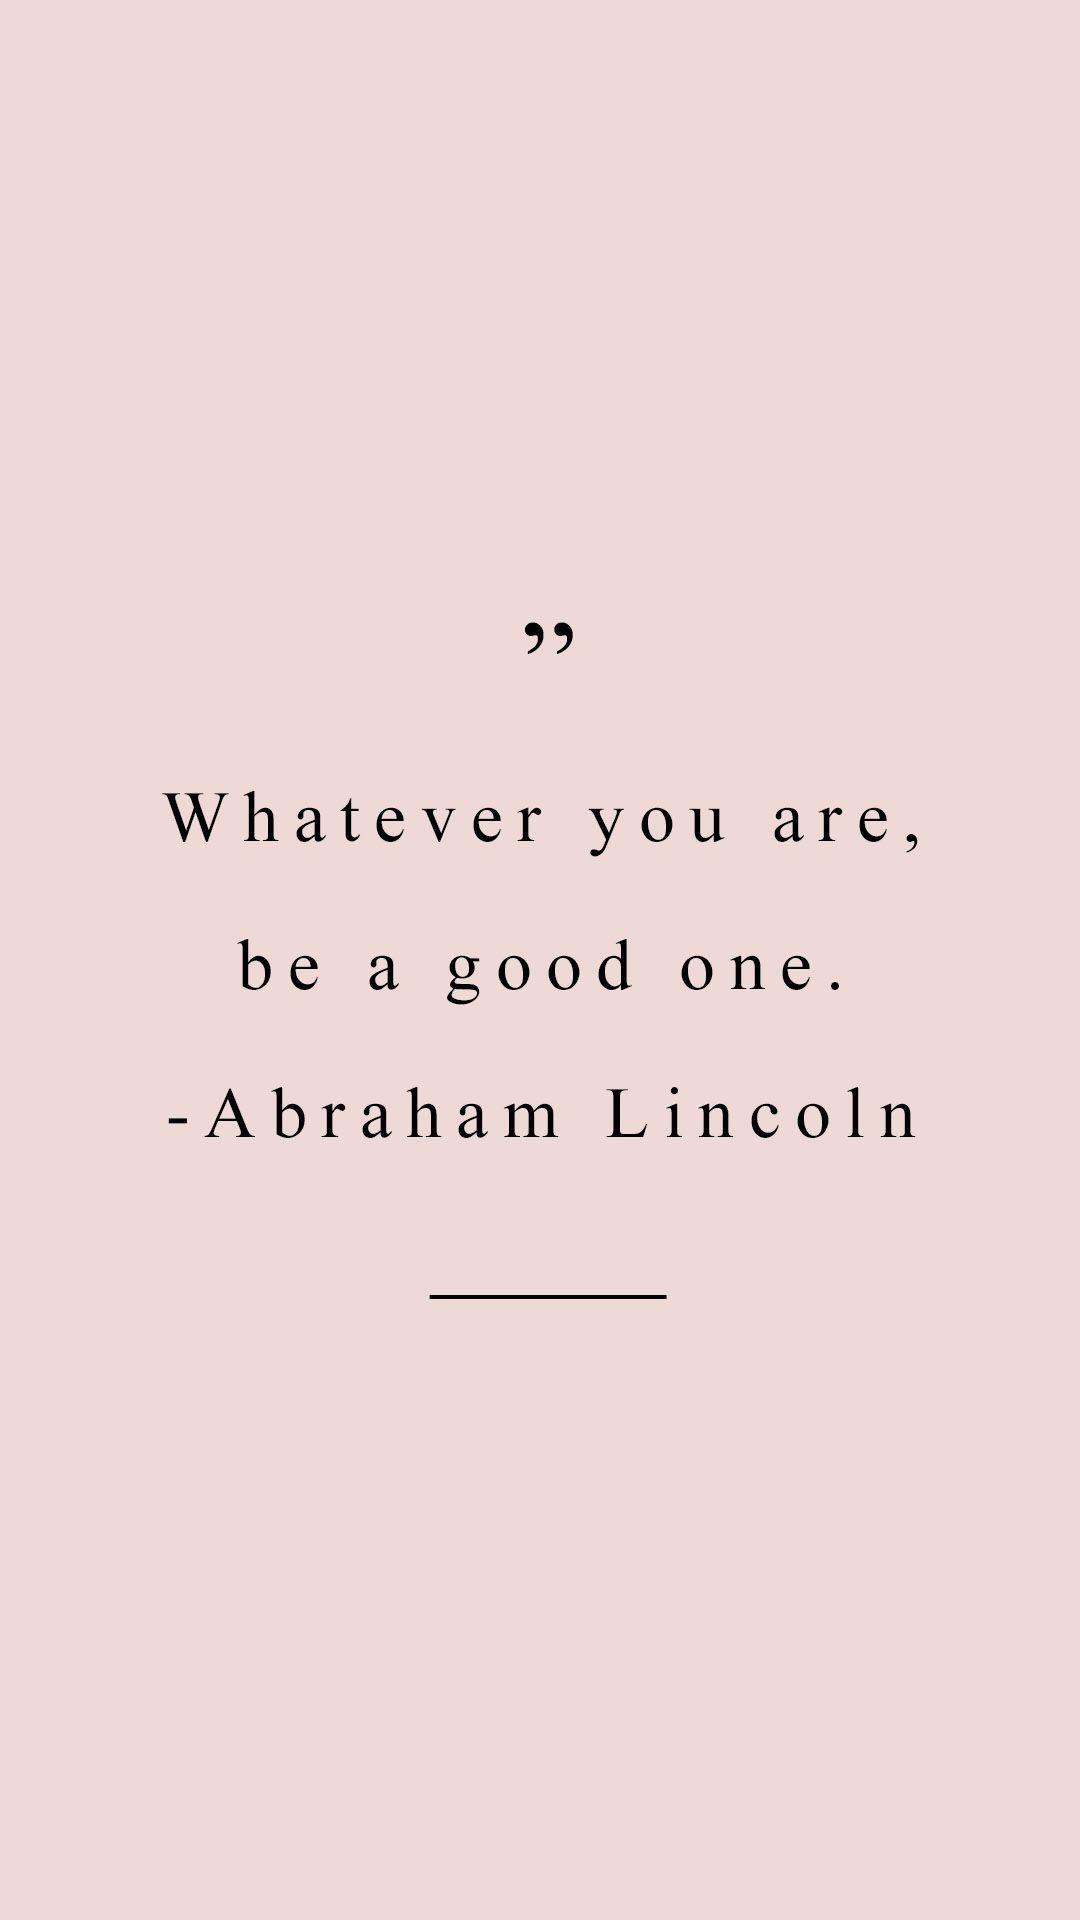 Abraham Lincoln quote inspirational .com